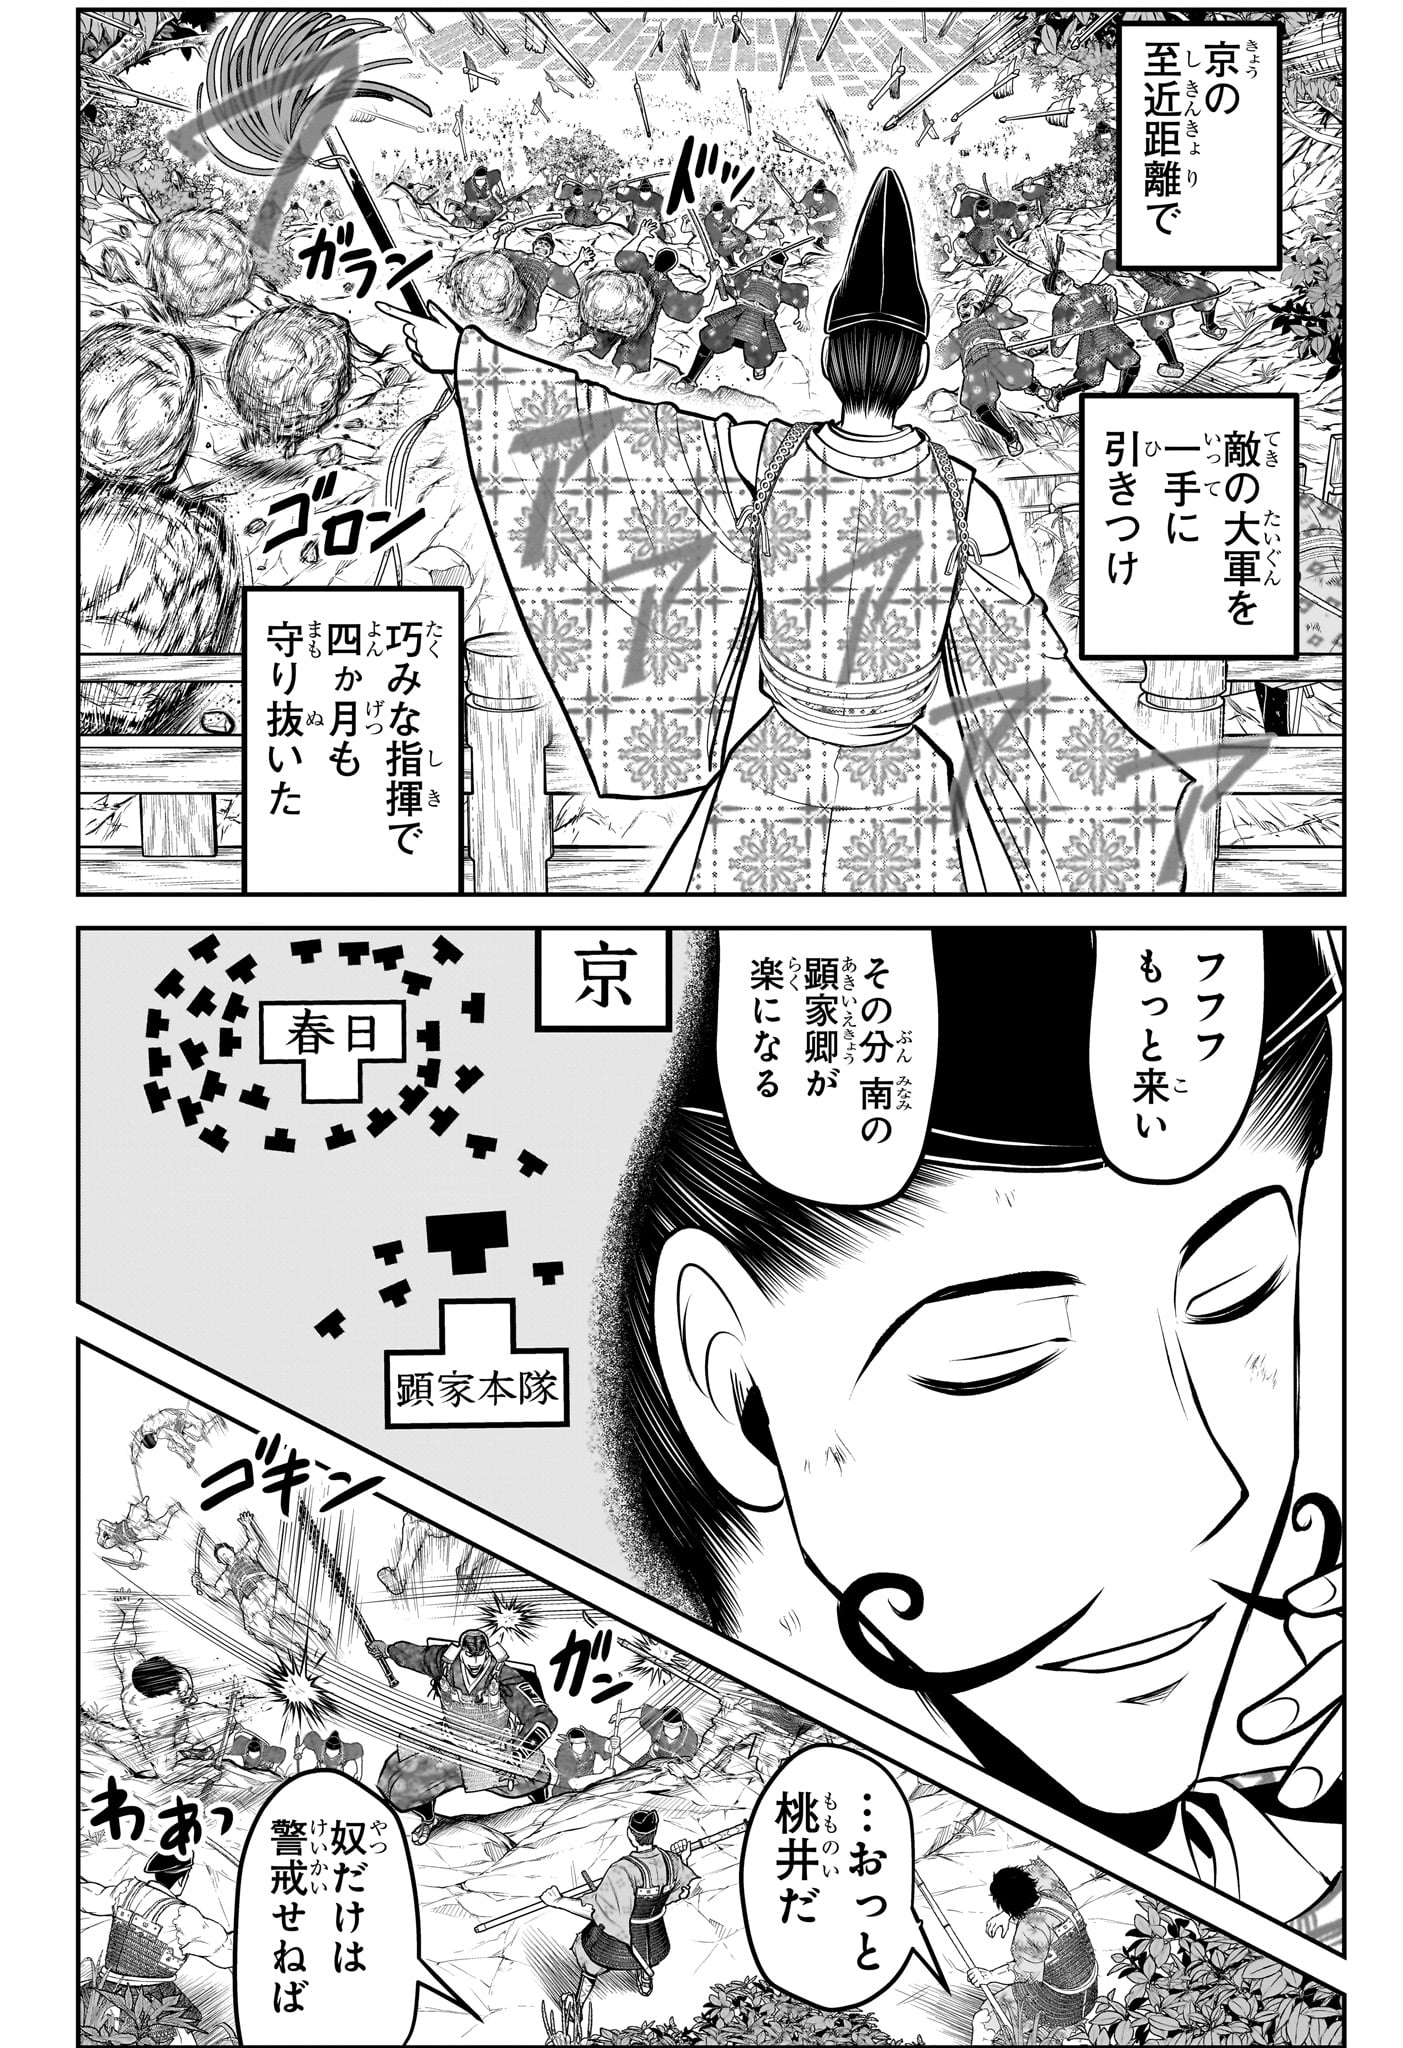 Nige Jouzu no Wakagimi - Chapter 154 - Page 2